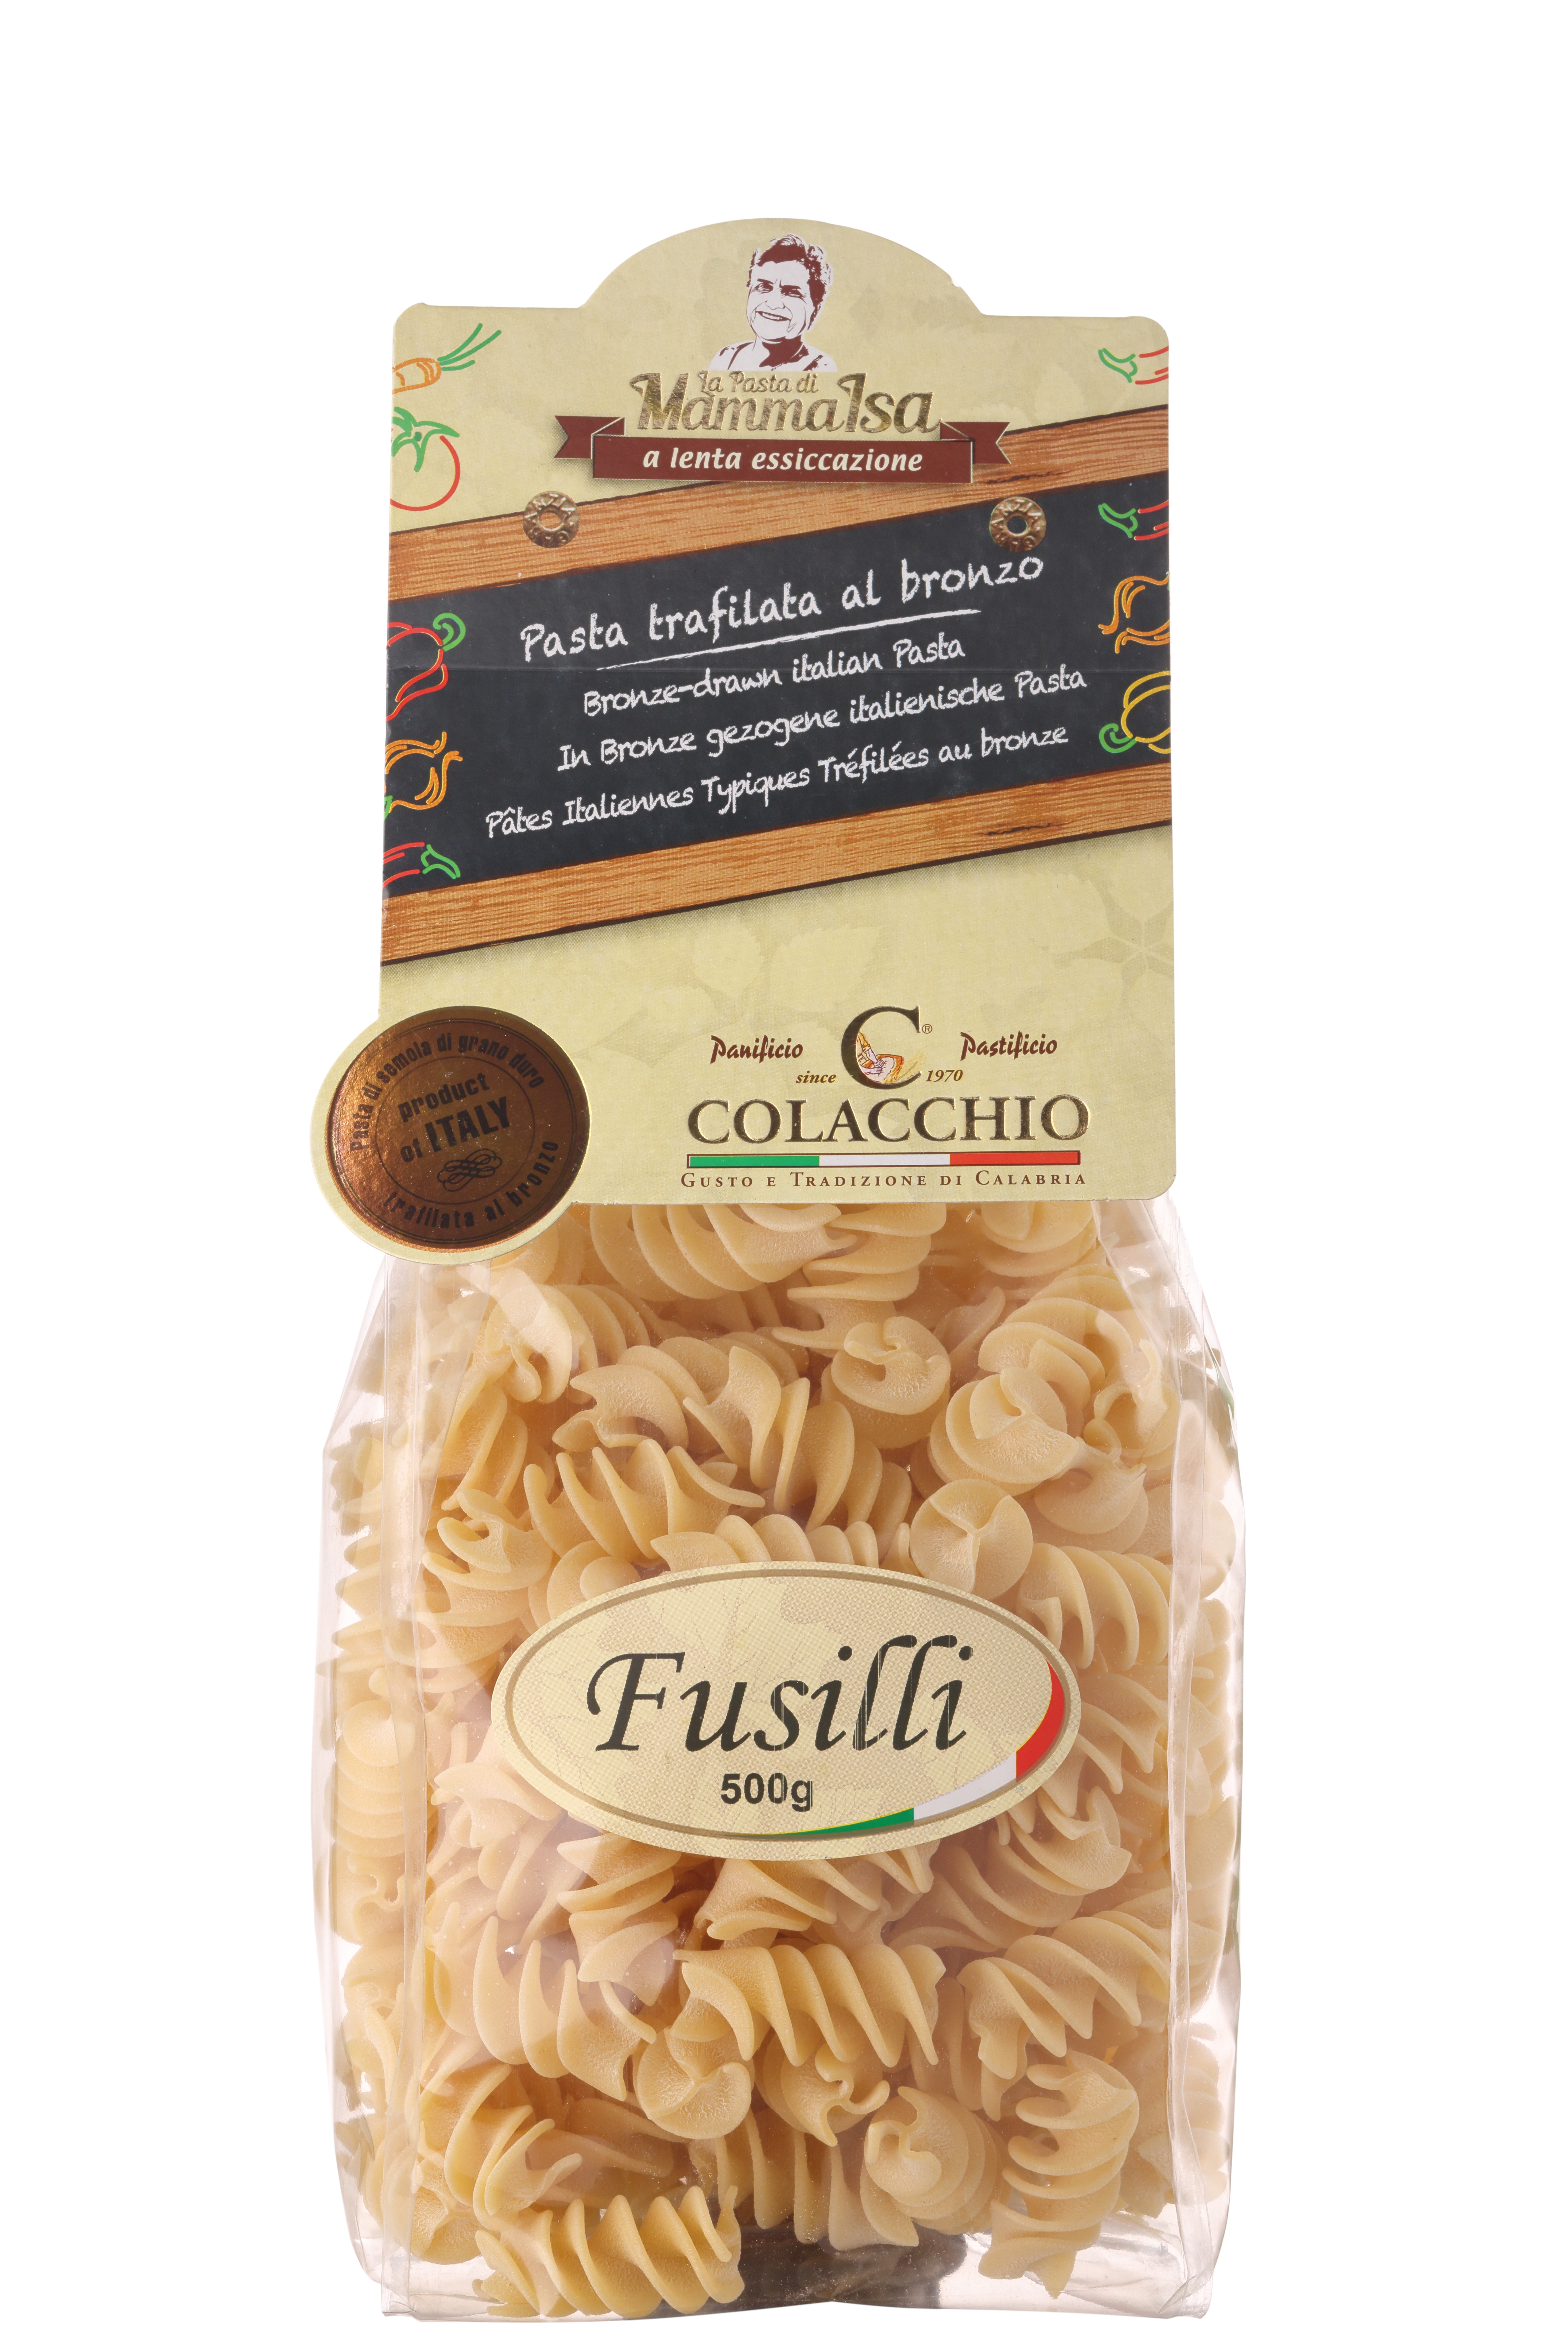 Colacchio,"Fusilli" Pasta, 500g